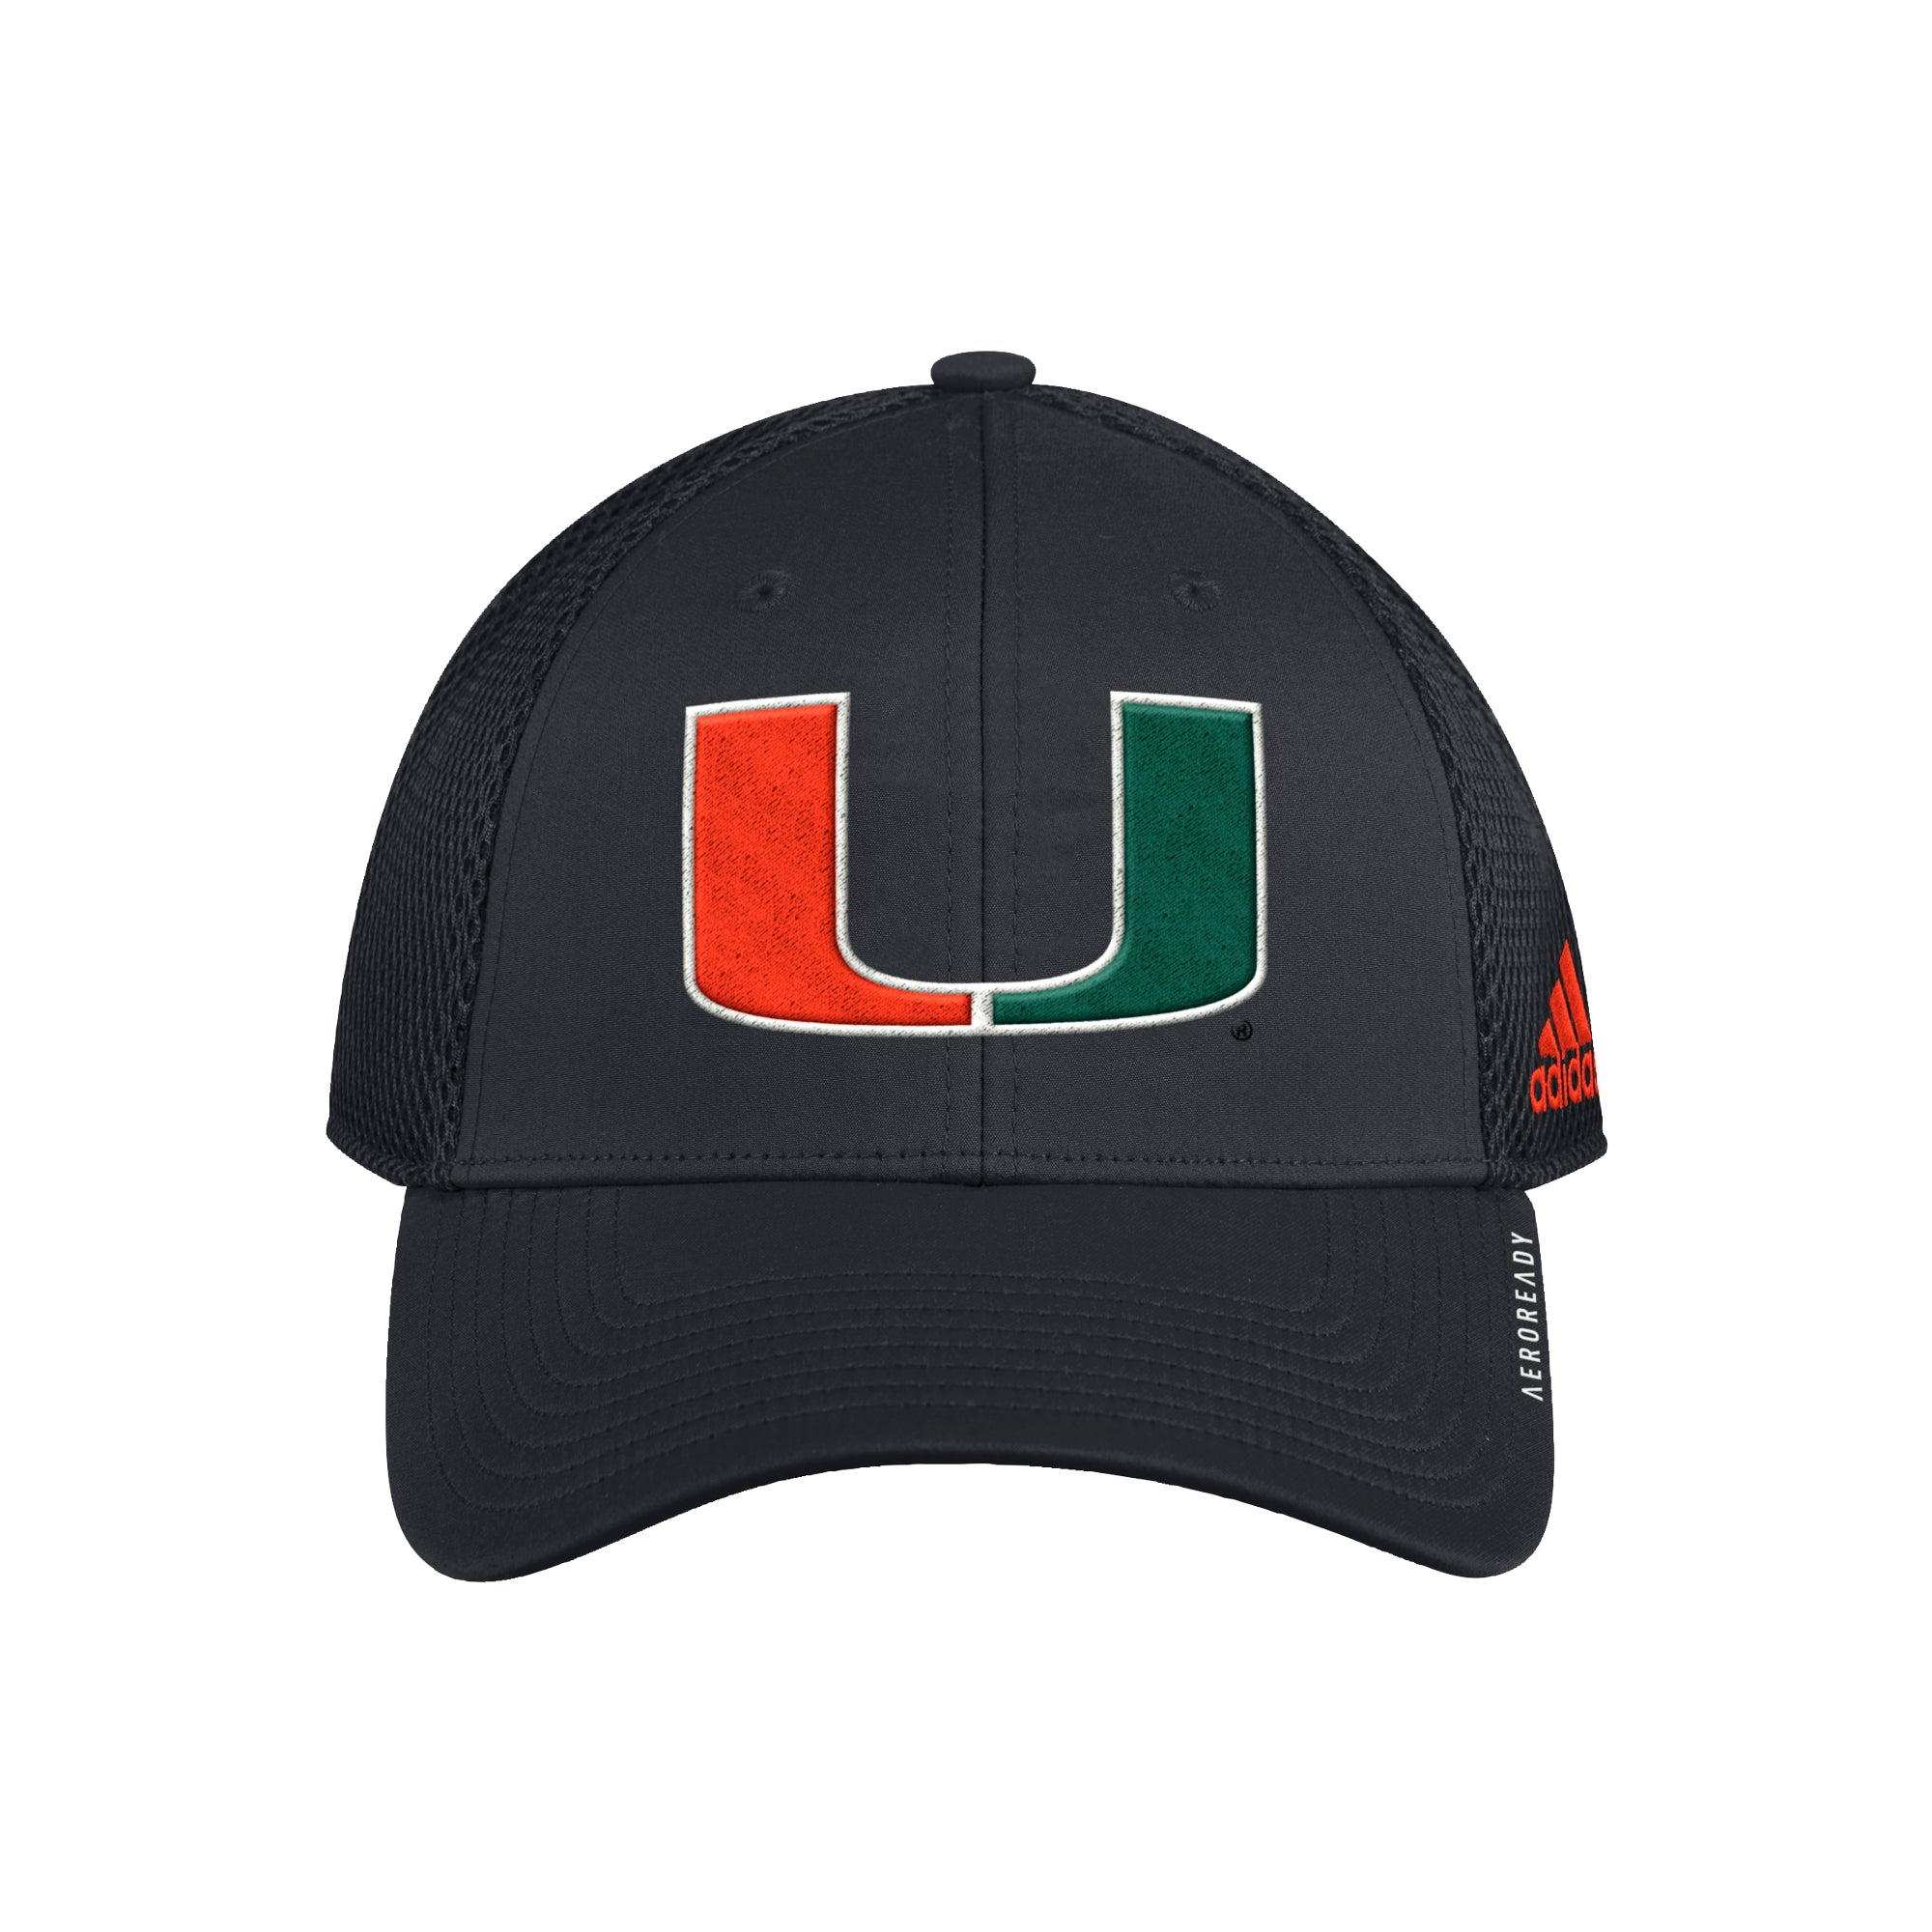 Miami Hurricanes adidas Coaches Mesh Structured Adjustable Hat - Black